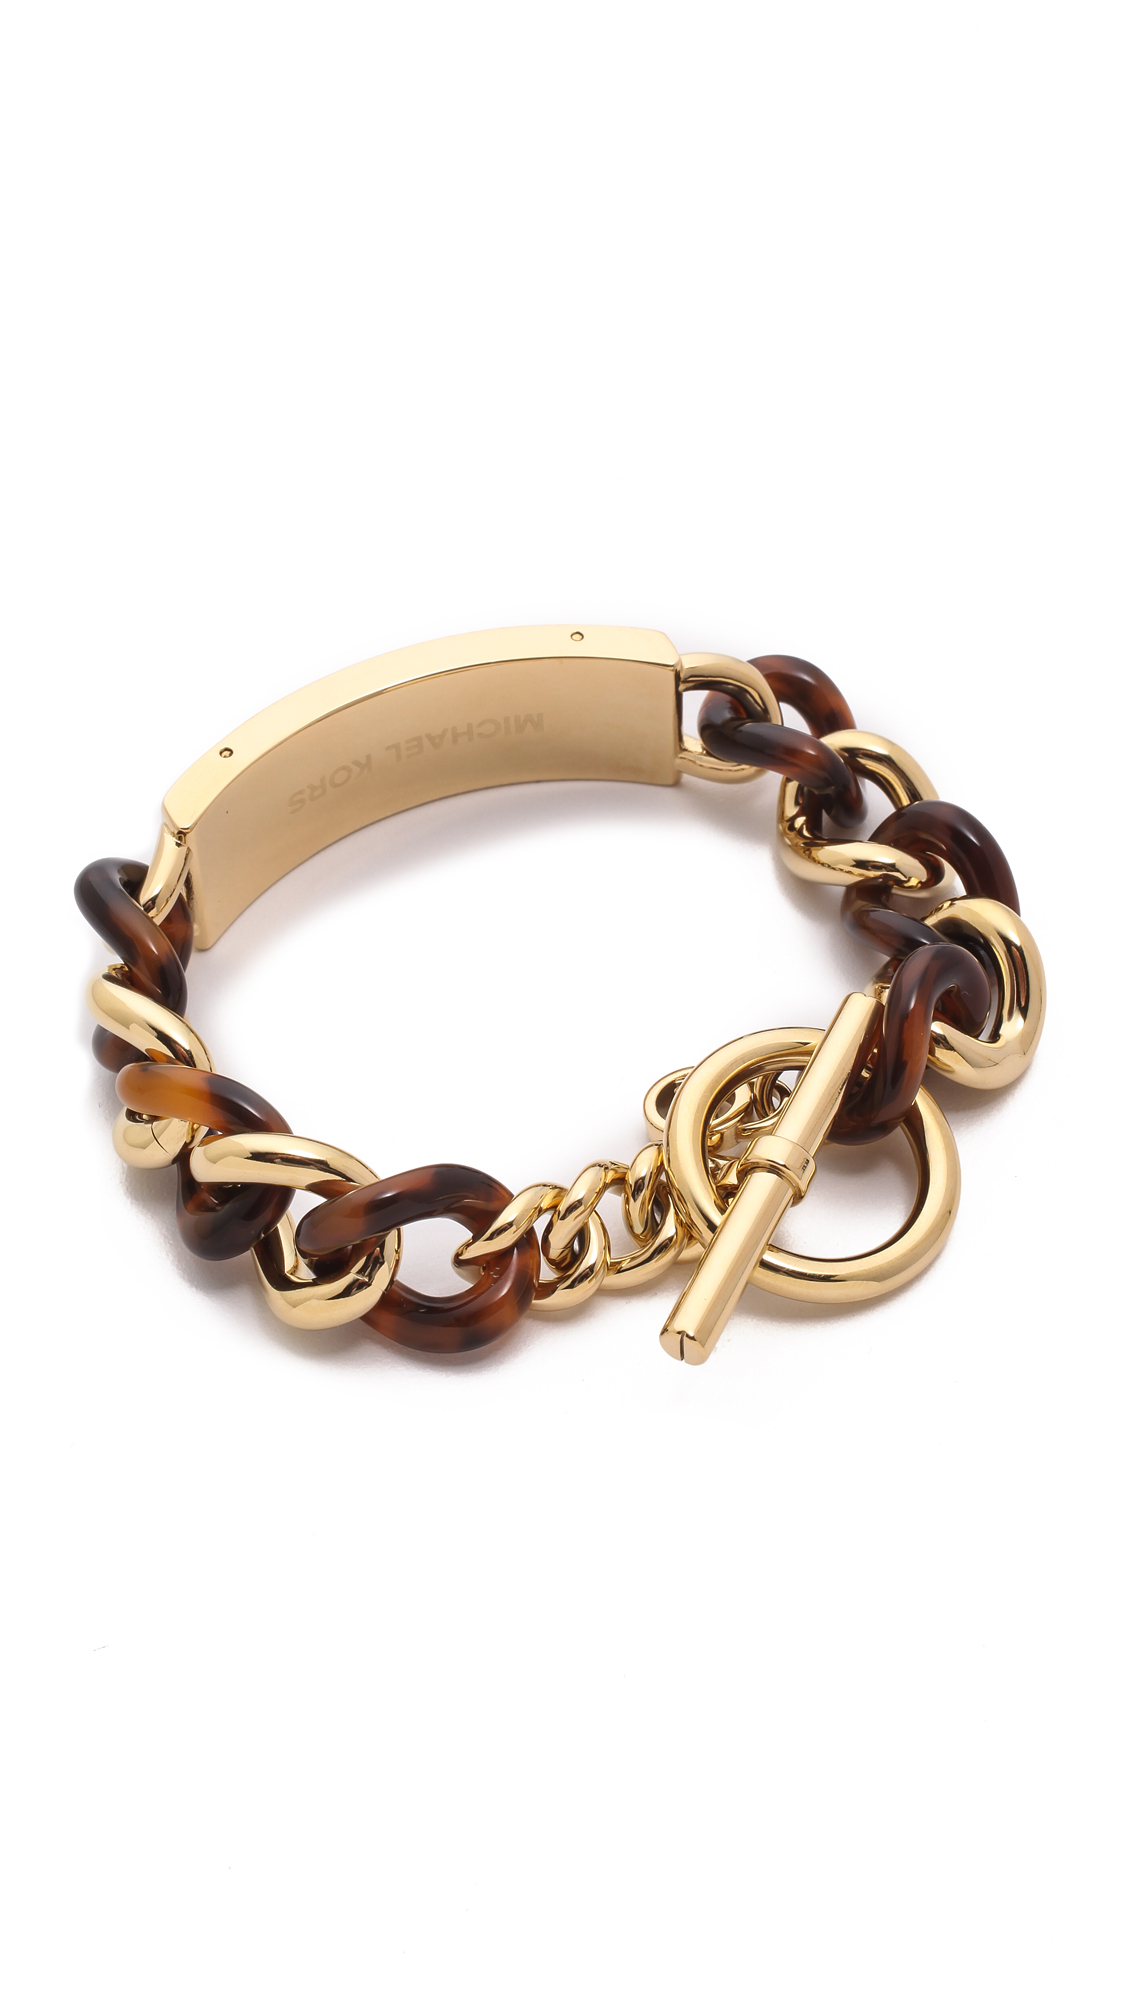 Lyst - Michael Kors Curb Chain Plaque Toggle Bracelet - Gold/Tortoise ...